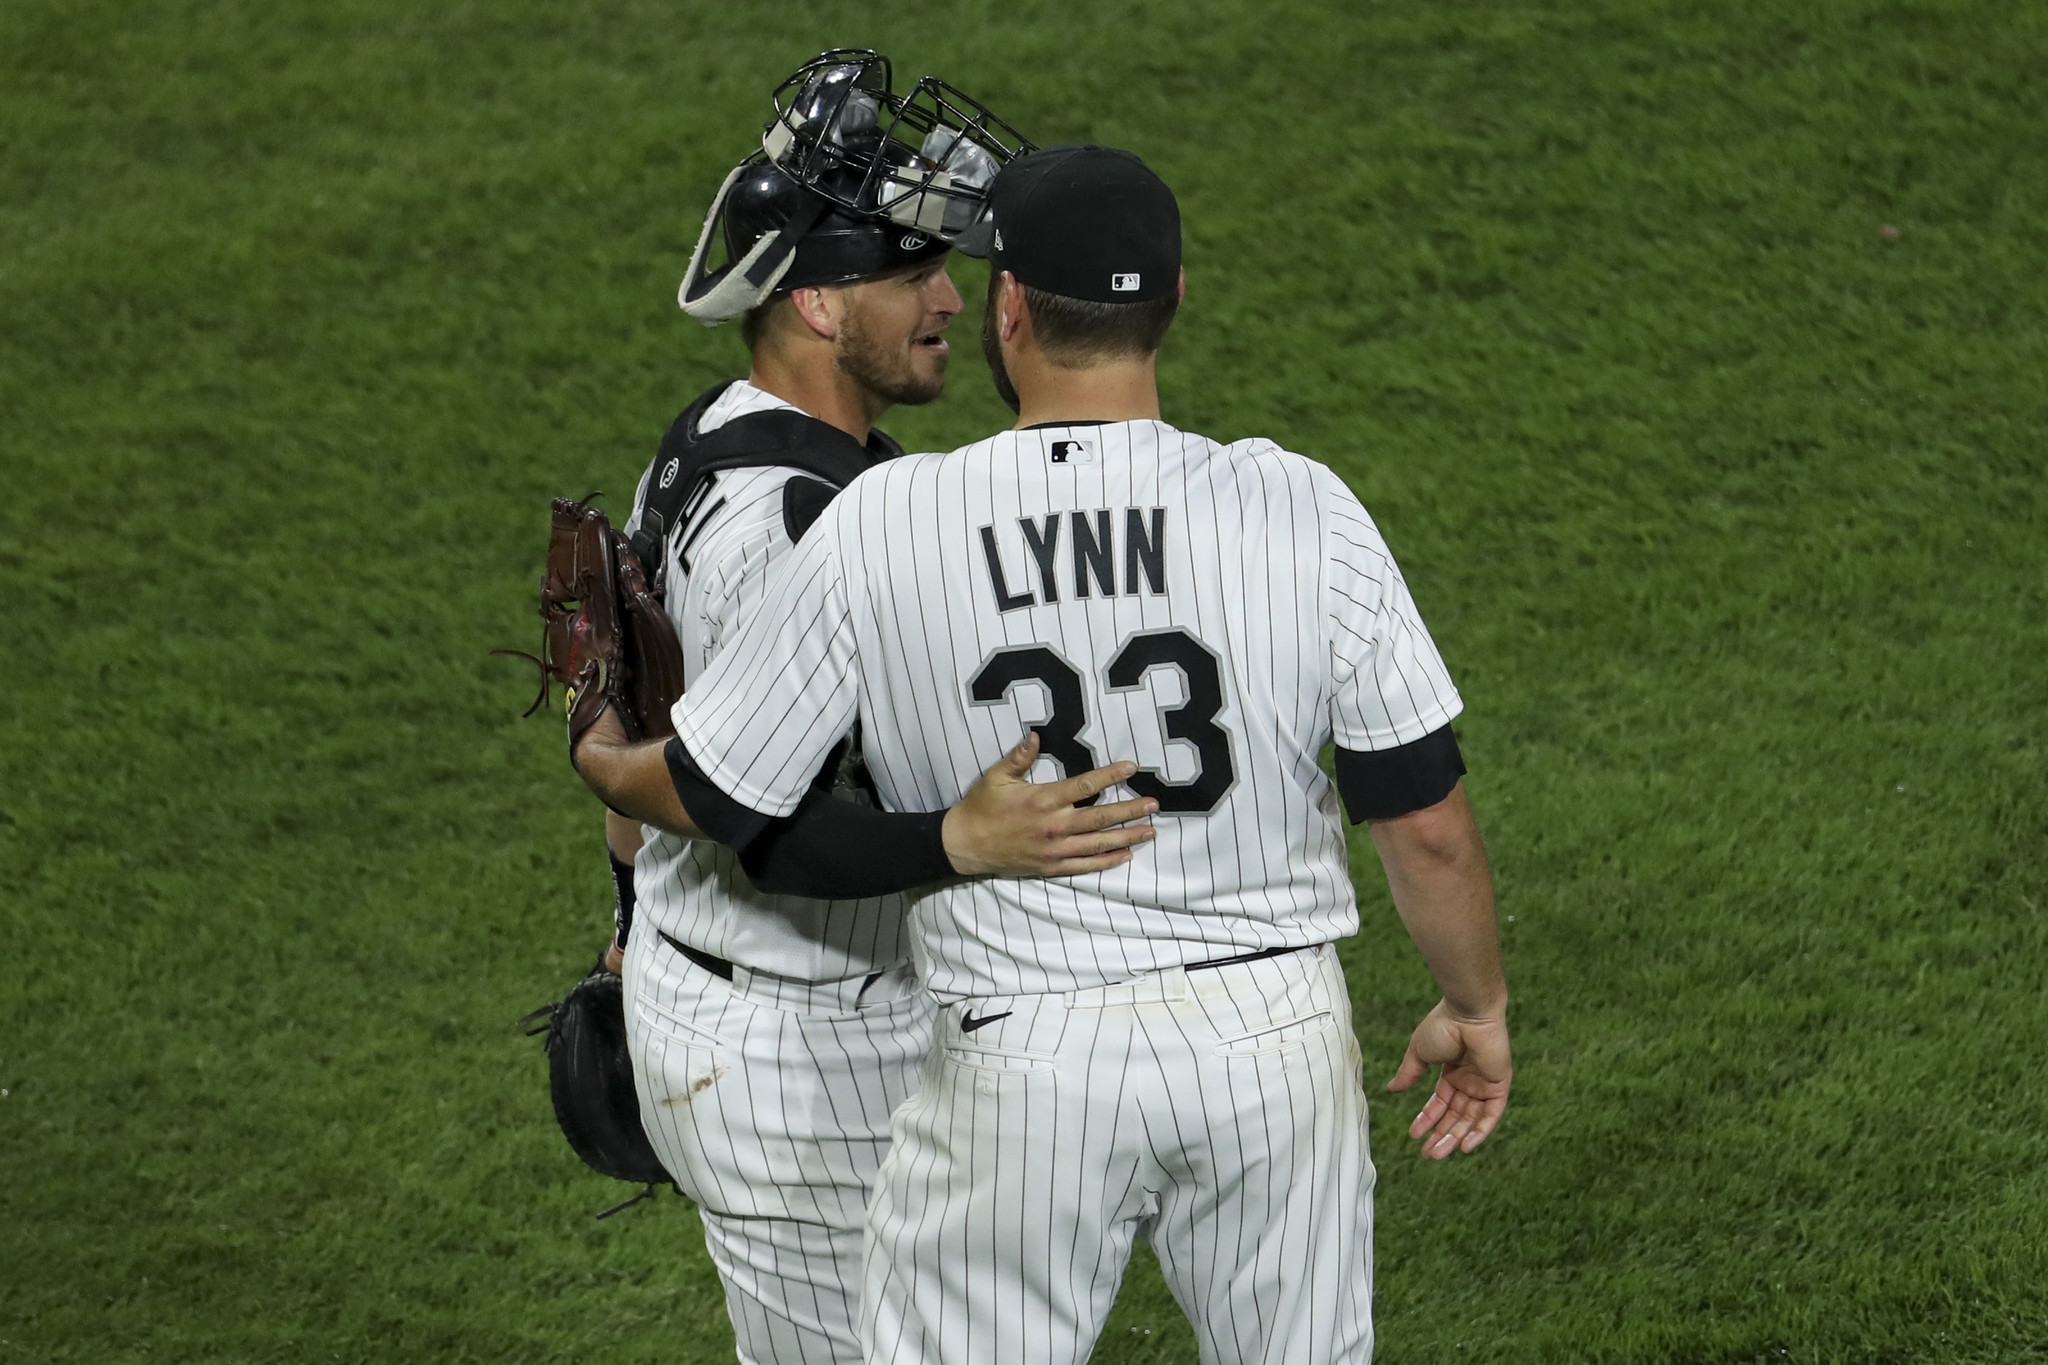 Lynn pitches 1st shutout of season, White Sox top Royals 6-0